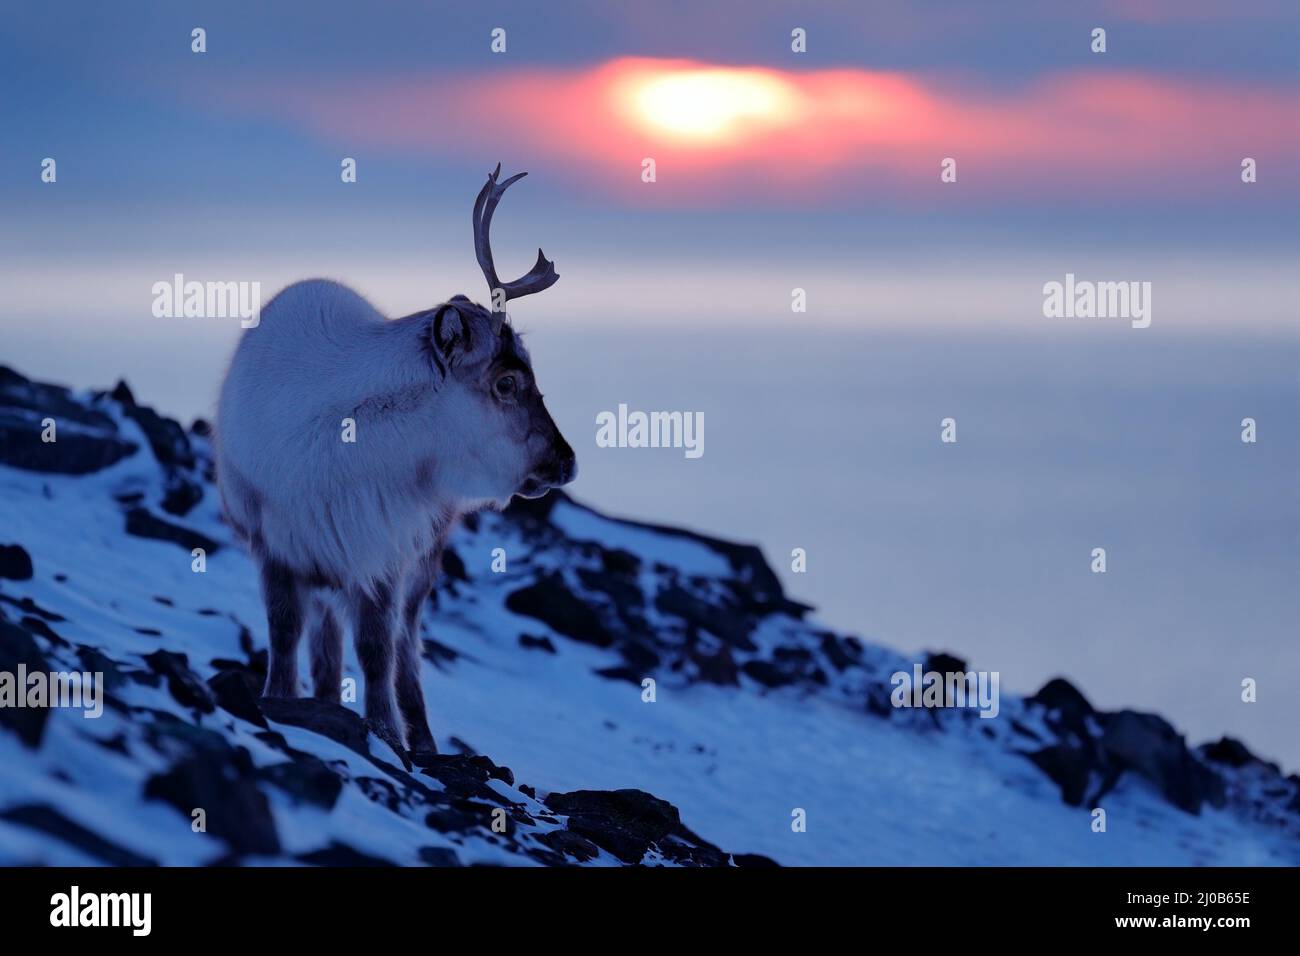 Arctic wildlife. Wild Reindeer, Rangifer tarandus, with massive antlers in snow, Svalbard, Norway. Svalbard caribou, wildlife scene from nature, winte Stock Photo